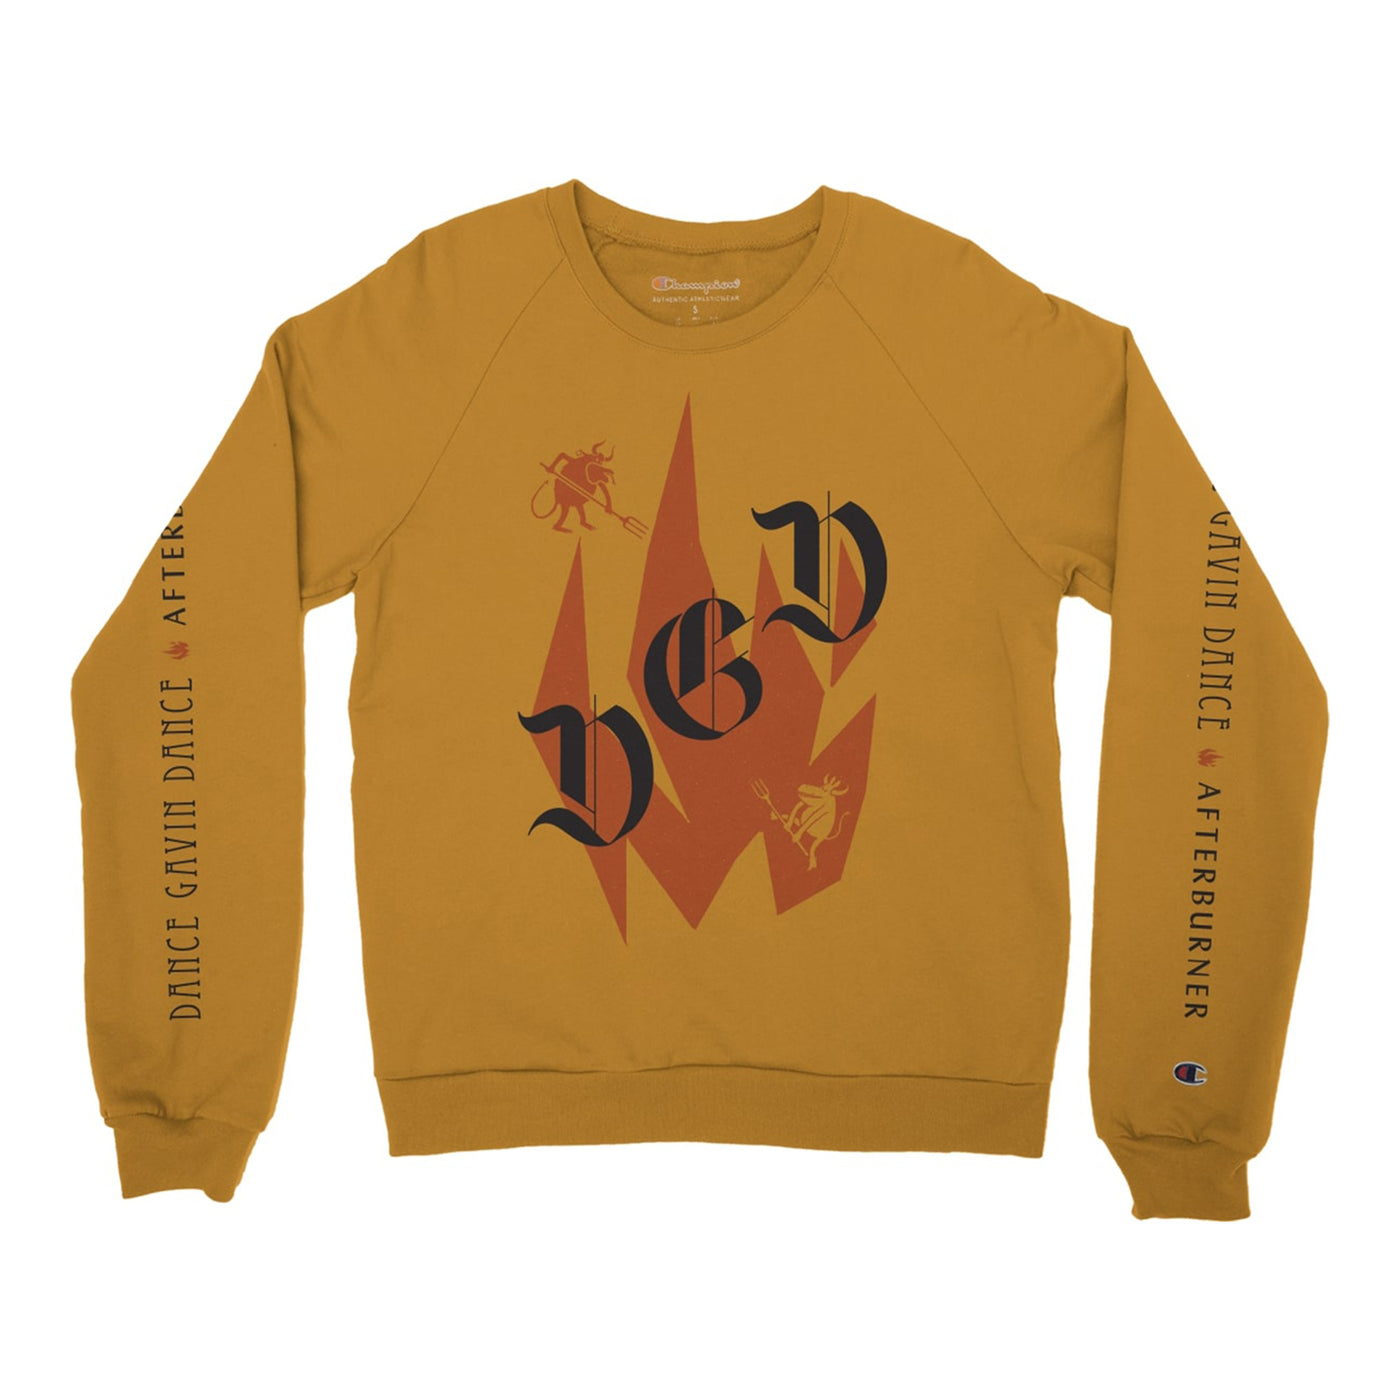 Afterburner Gold Crewneck Sweatshirt